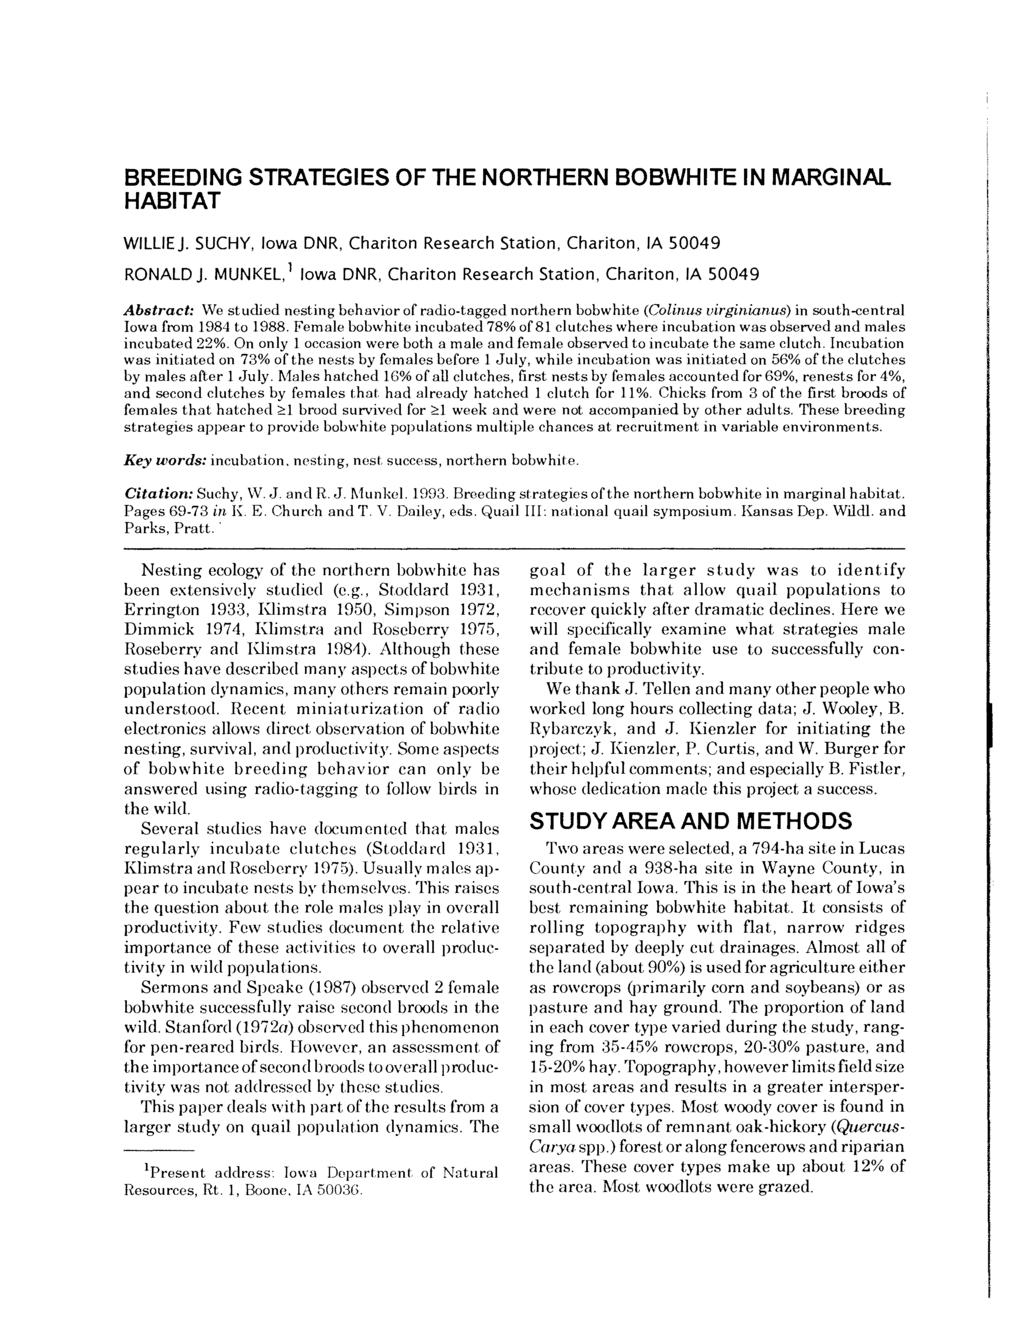 Suchy and Munkel: Breeding Strategies of the Northern Bobwhite in Marginal Habitat BREEDING STRATEGIES OF THE NORTHERN BOBWHITE IN MARGINAL HABITAT WILLIEJ.